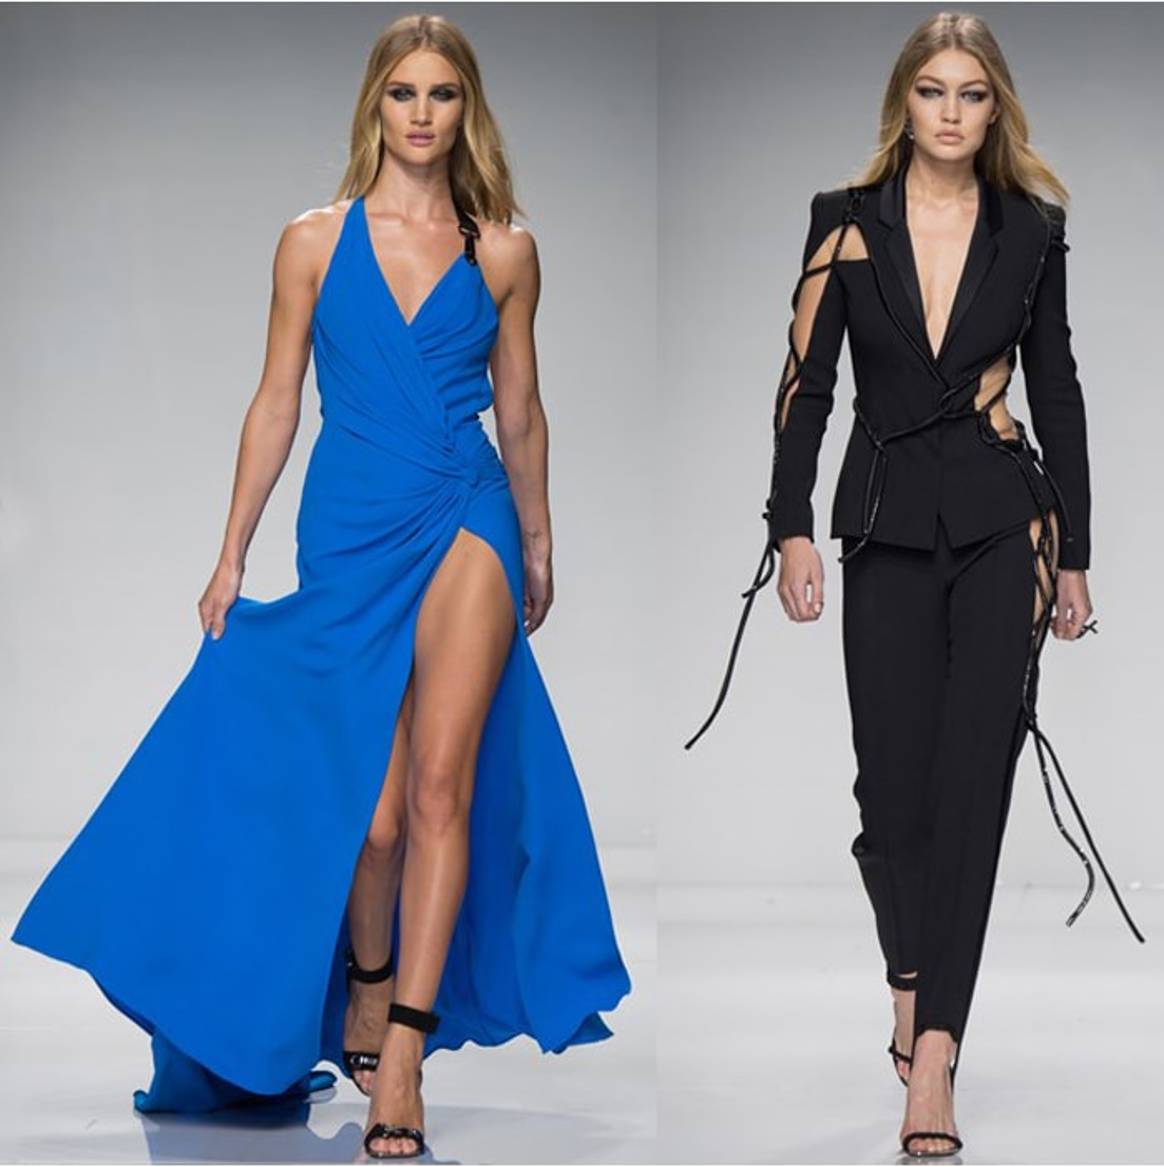 Versace sexes up Haute Couture with racy Paris show